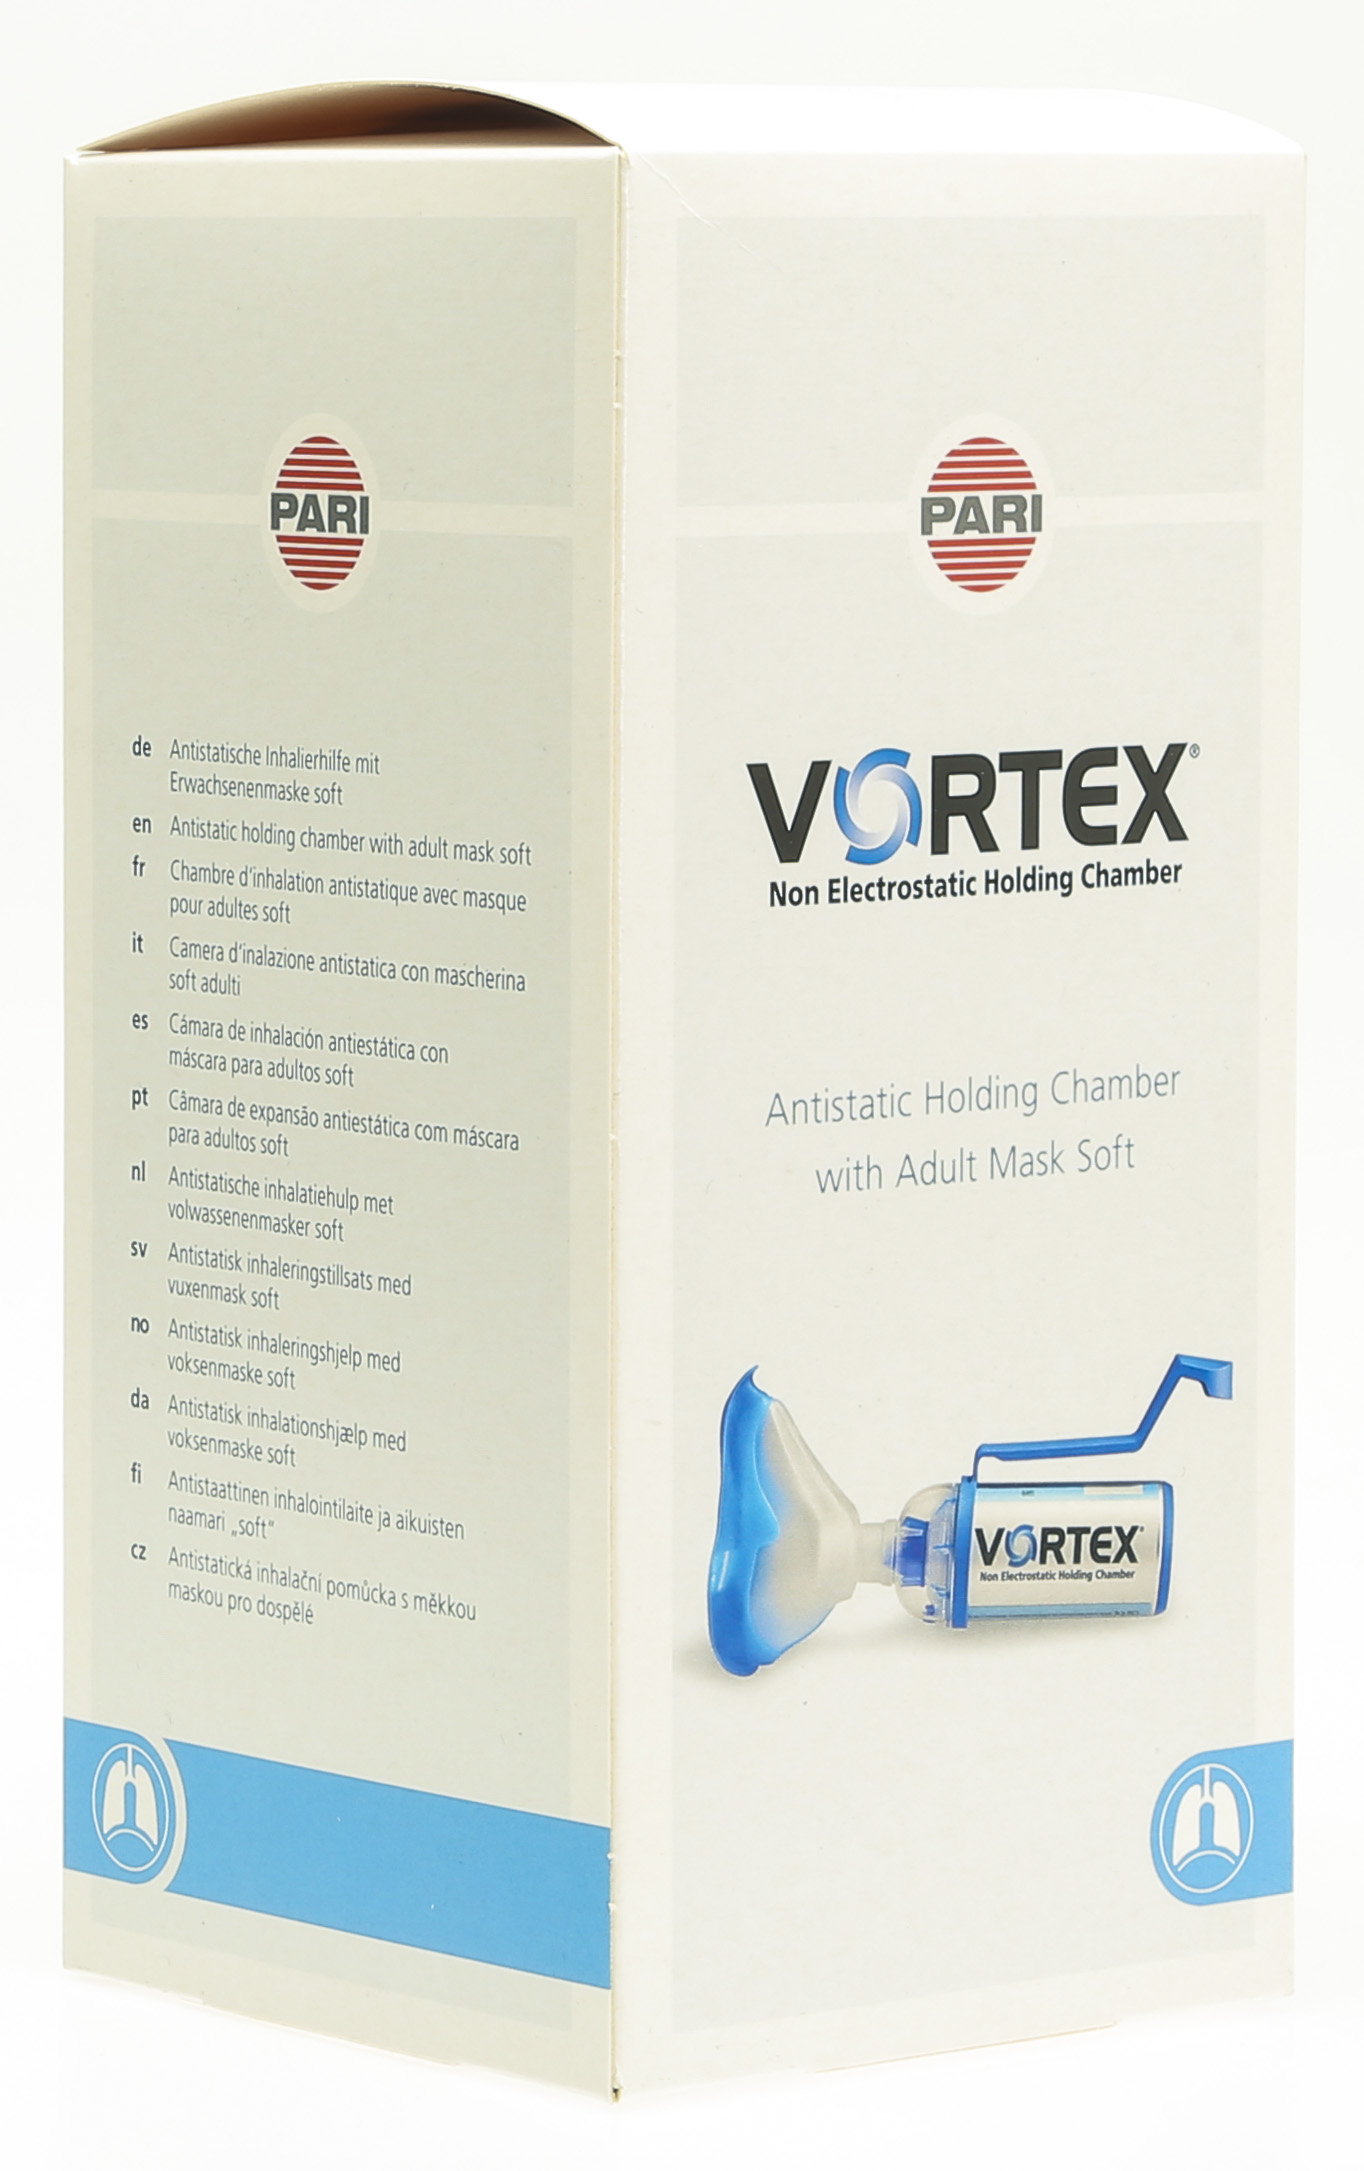 Vortex : petit, robuste et efficace